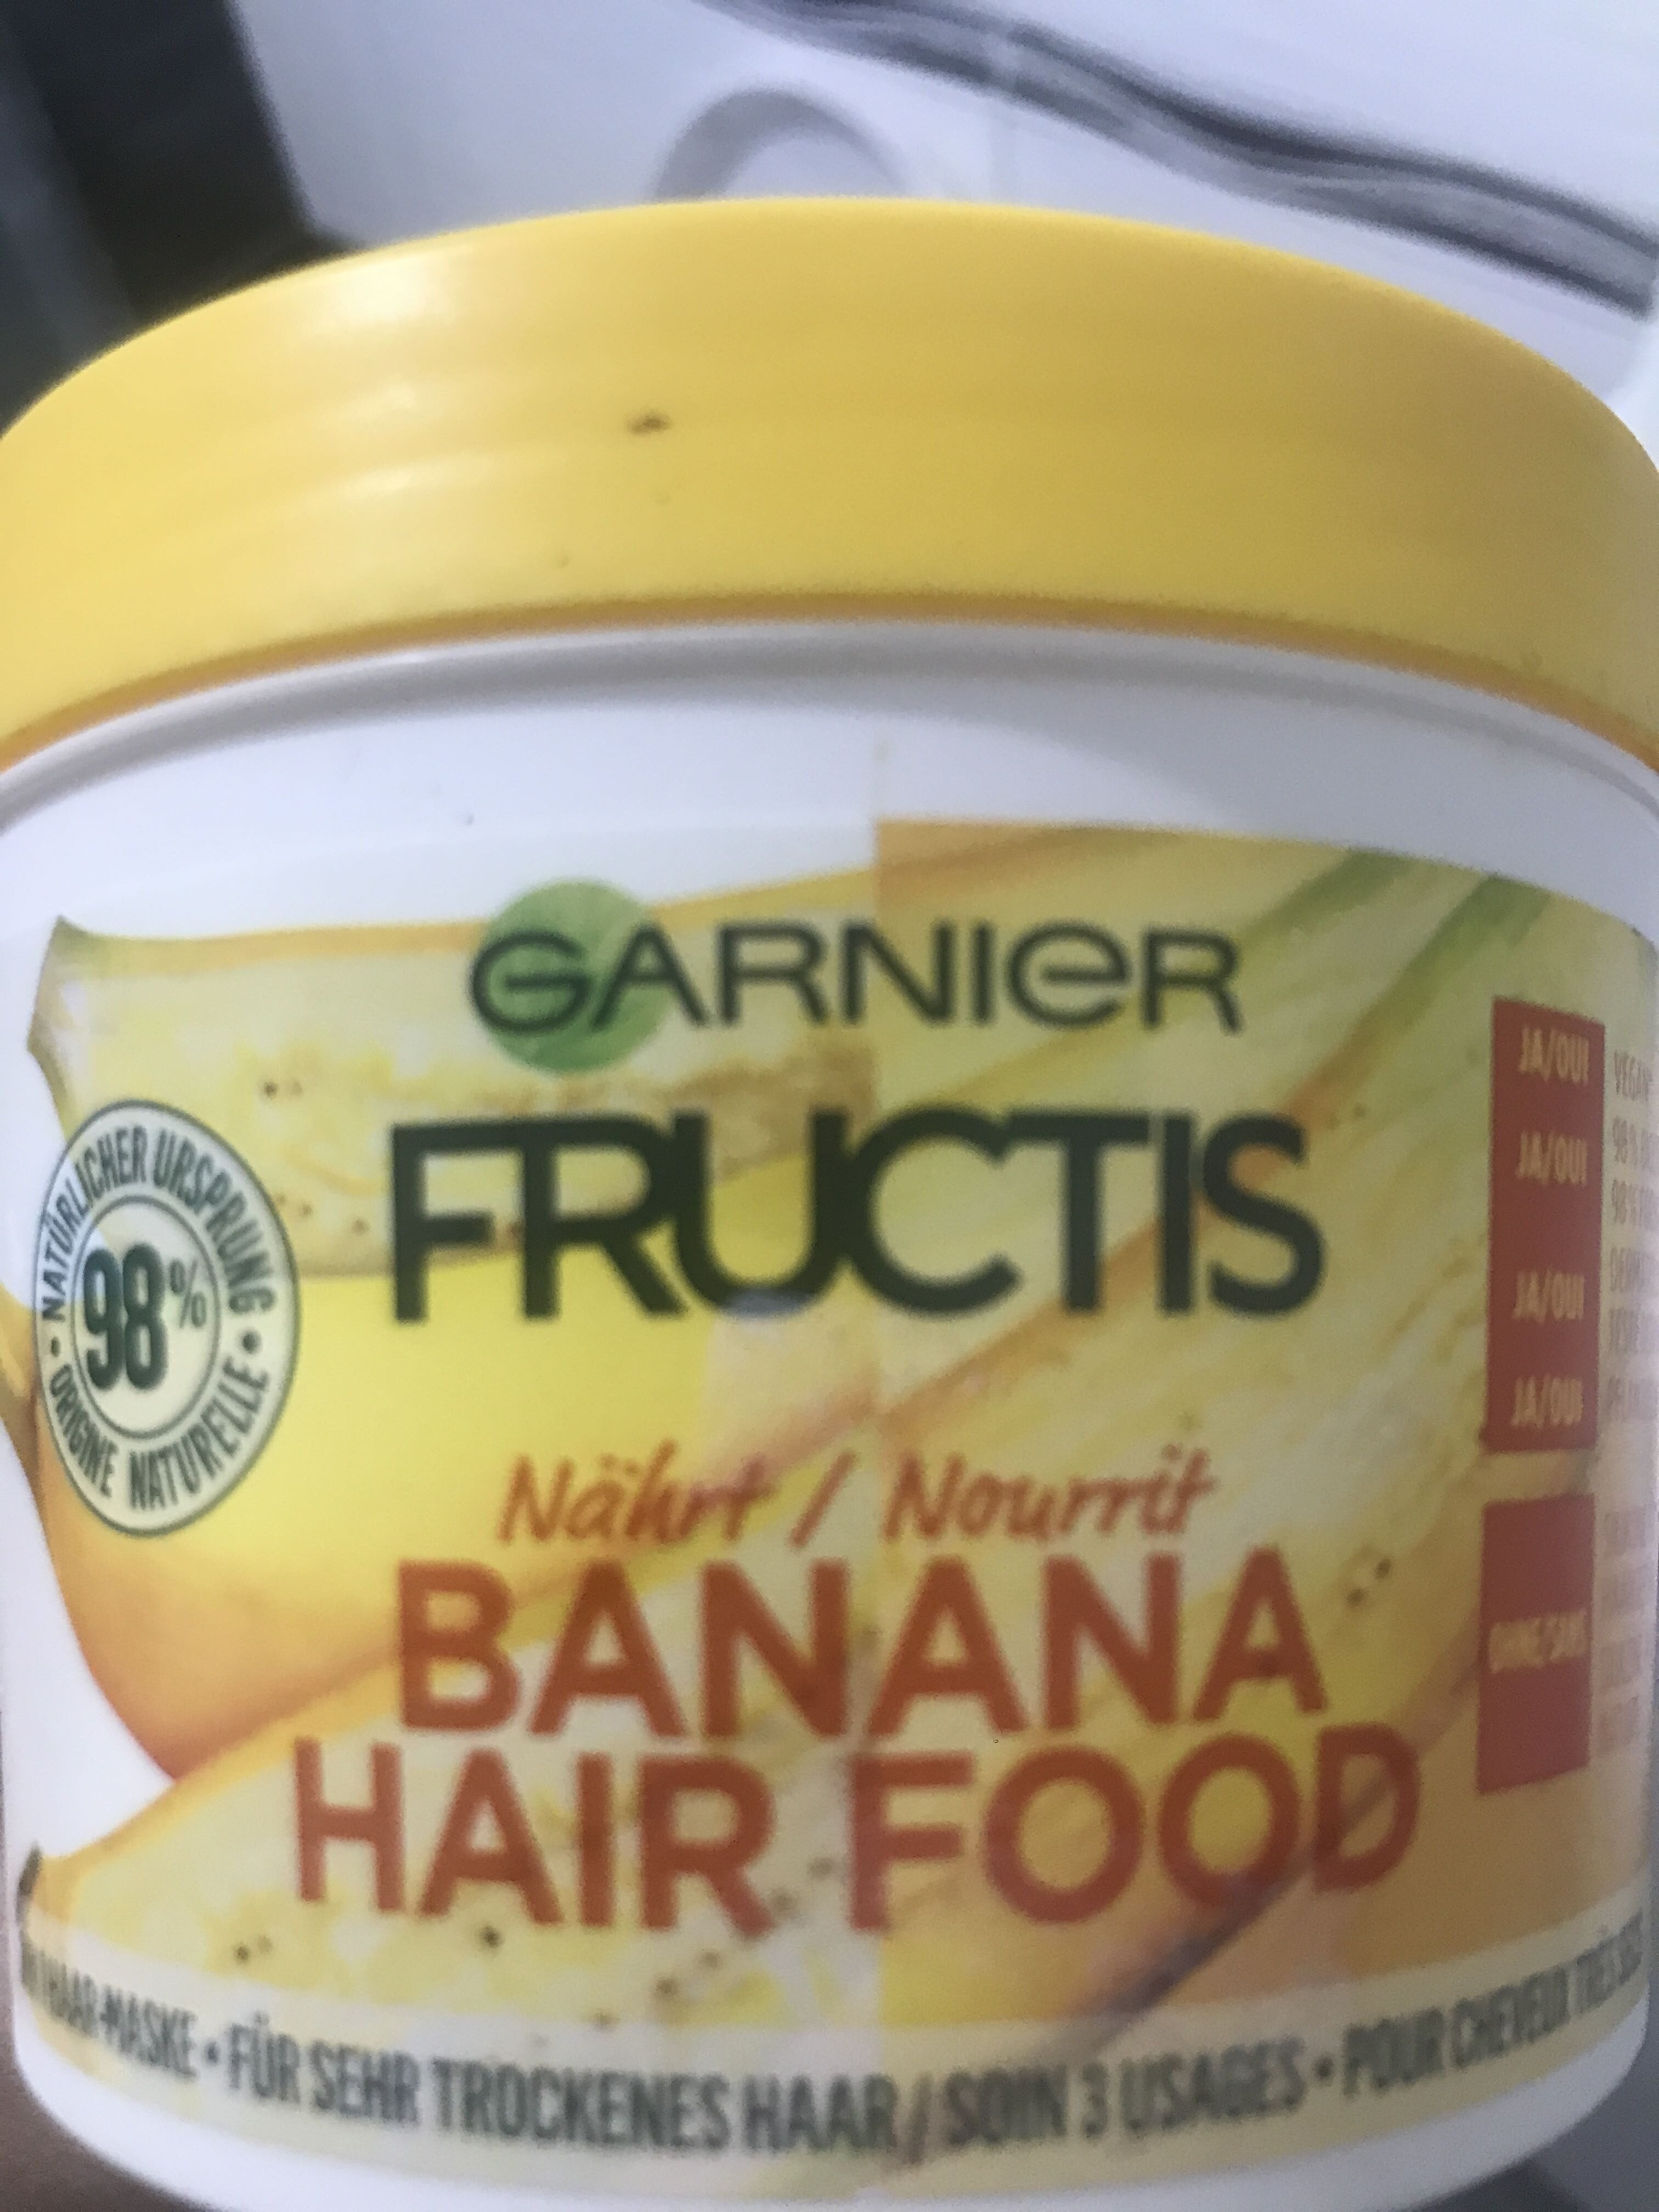 FRUCTIS - Banana Hair Food - Product - en